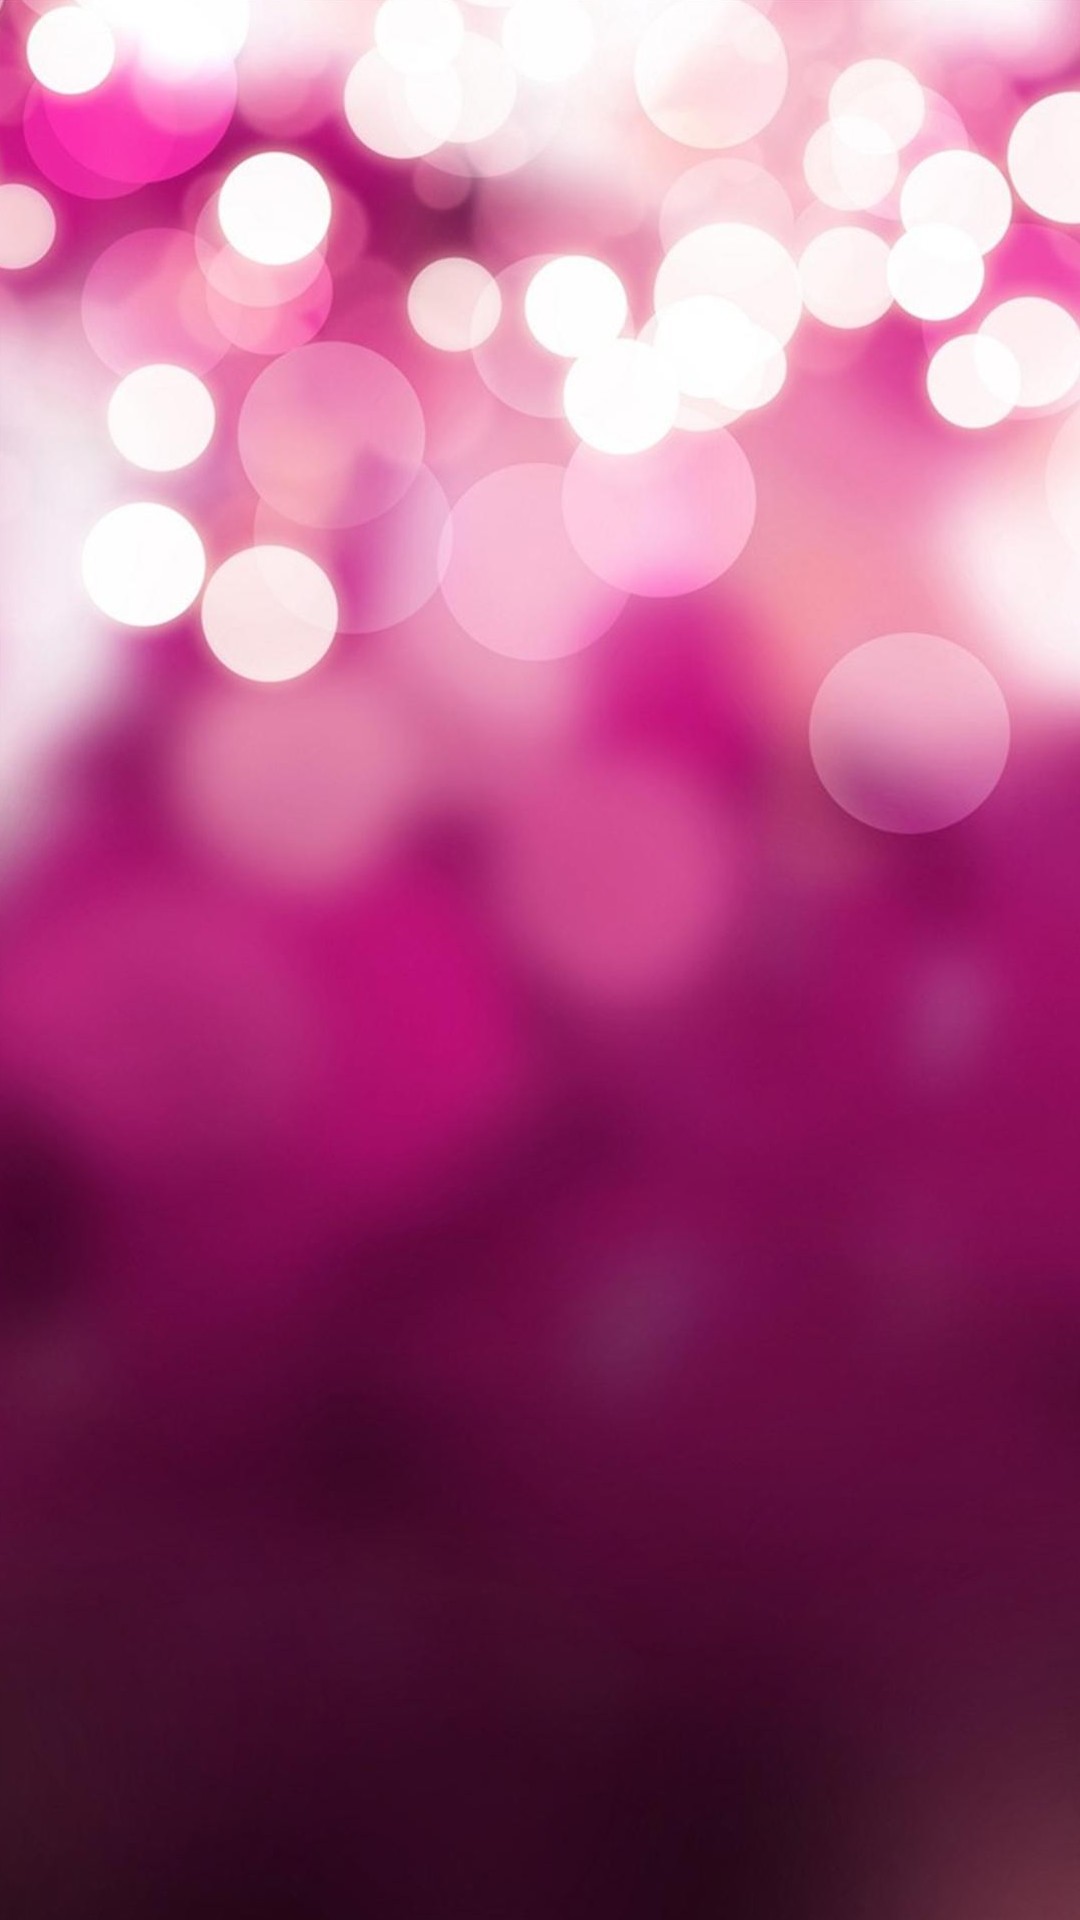 1080x1920 Colorful Galaxy S4 Wallpapers HD 92 Pink Galaxy Wallpaper Hd